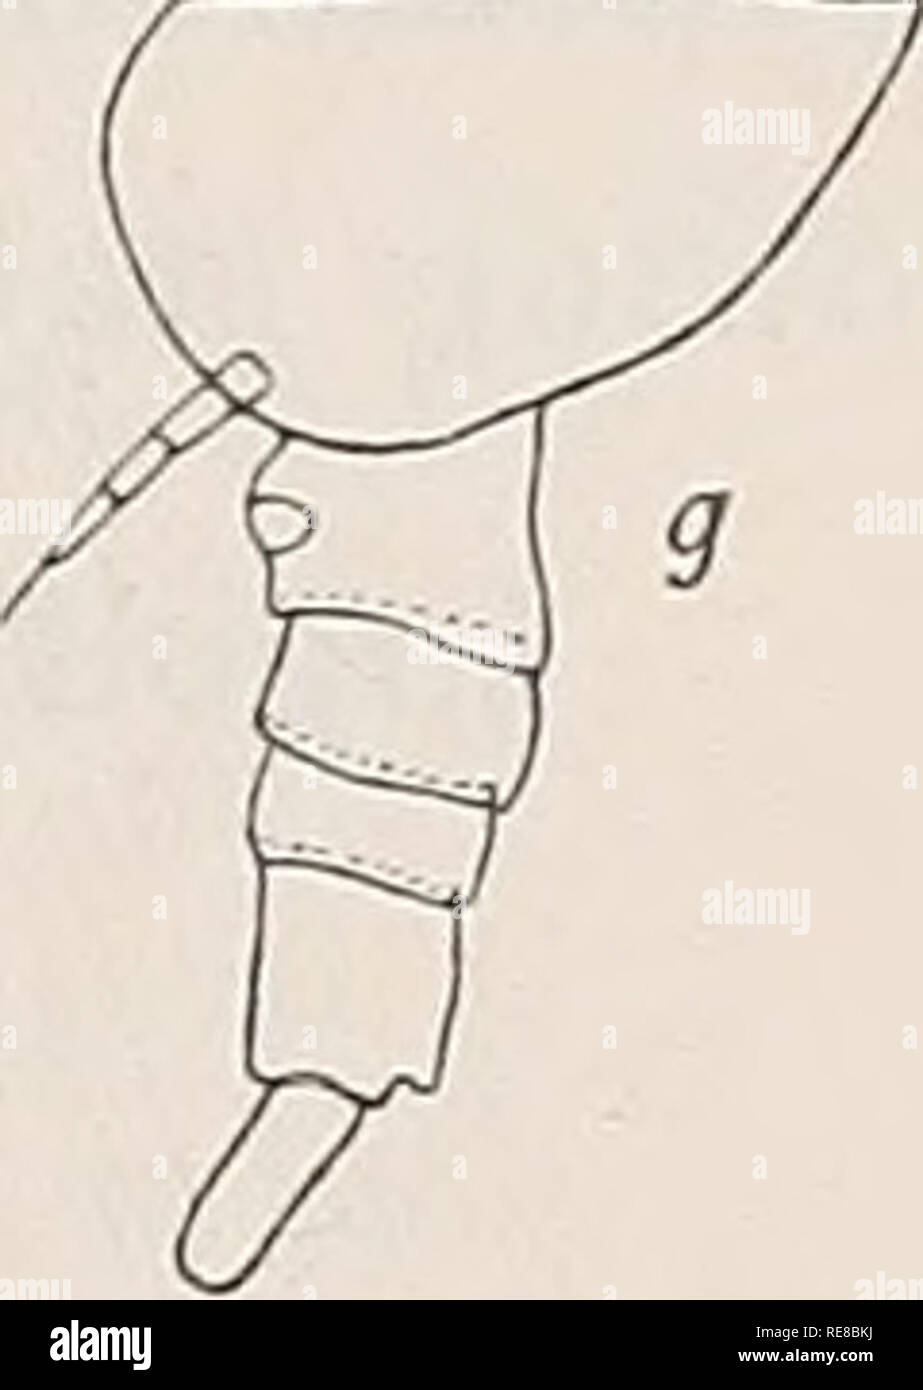 Copepoda Calanoida Copepoda Text Fig 12 Paracalanus Parvus Claus A F 9 Genital Somite In Lateral View X 90 B Yq Stage V Abdomen X 90 C Y Cj Stage V Abdomen